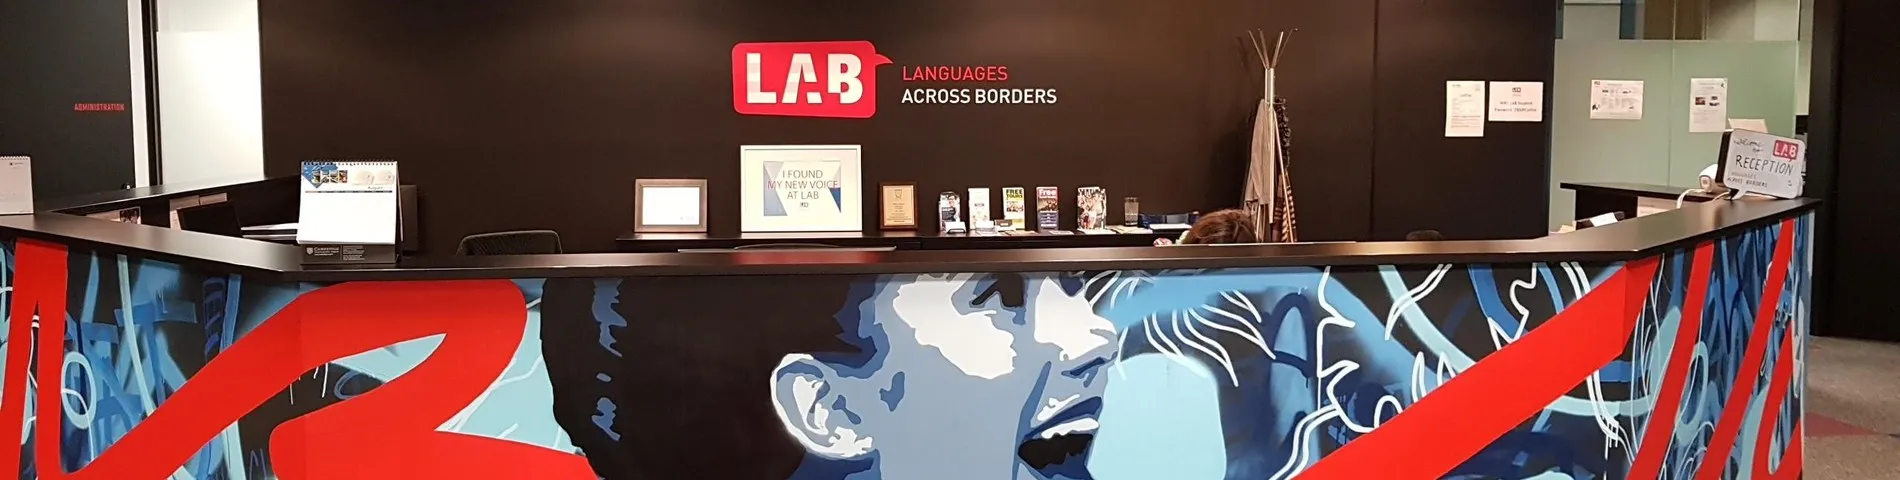 LAB - Languages Across Borders foto 1